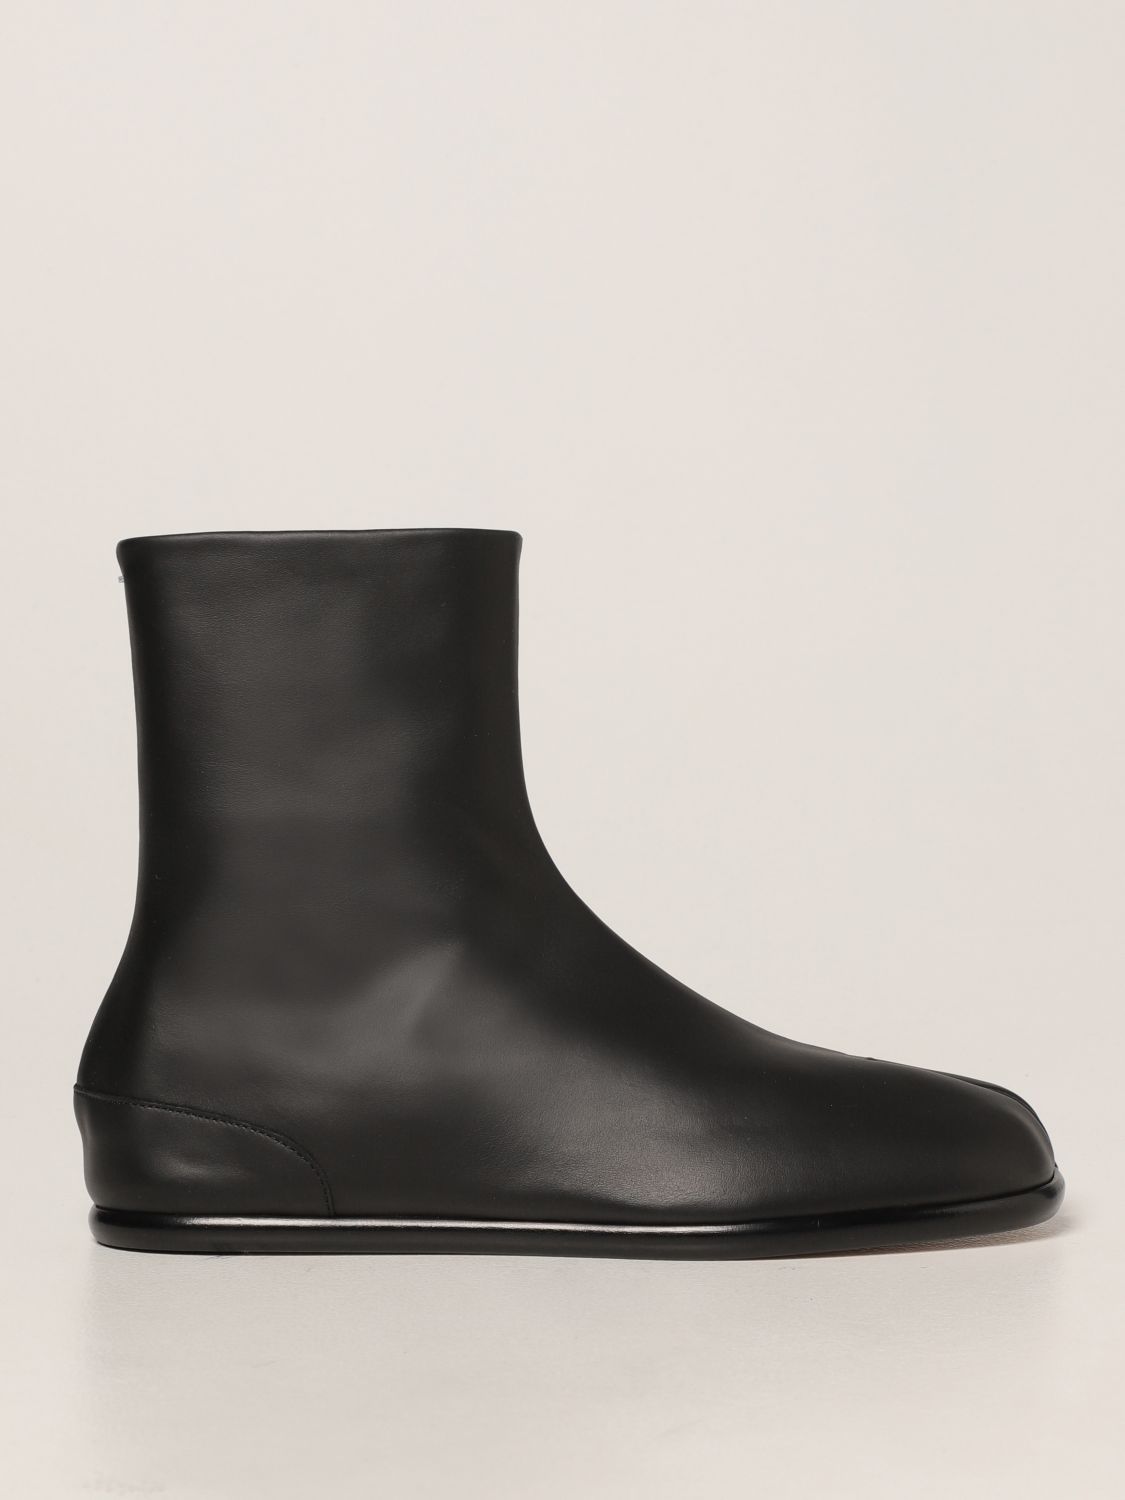 MAISON MARGIELA: Tabi split leather ankle boots - Black | MAISON ...